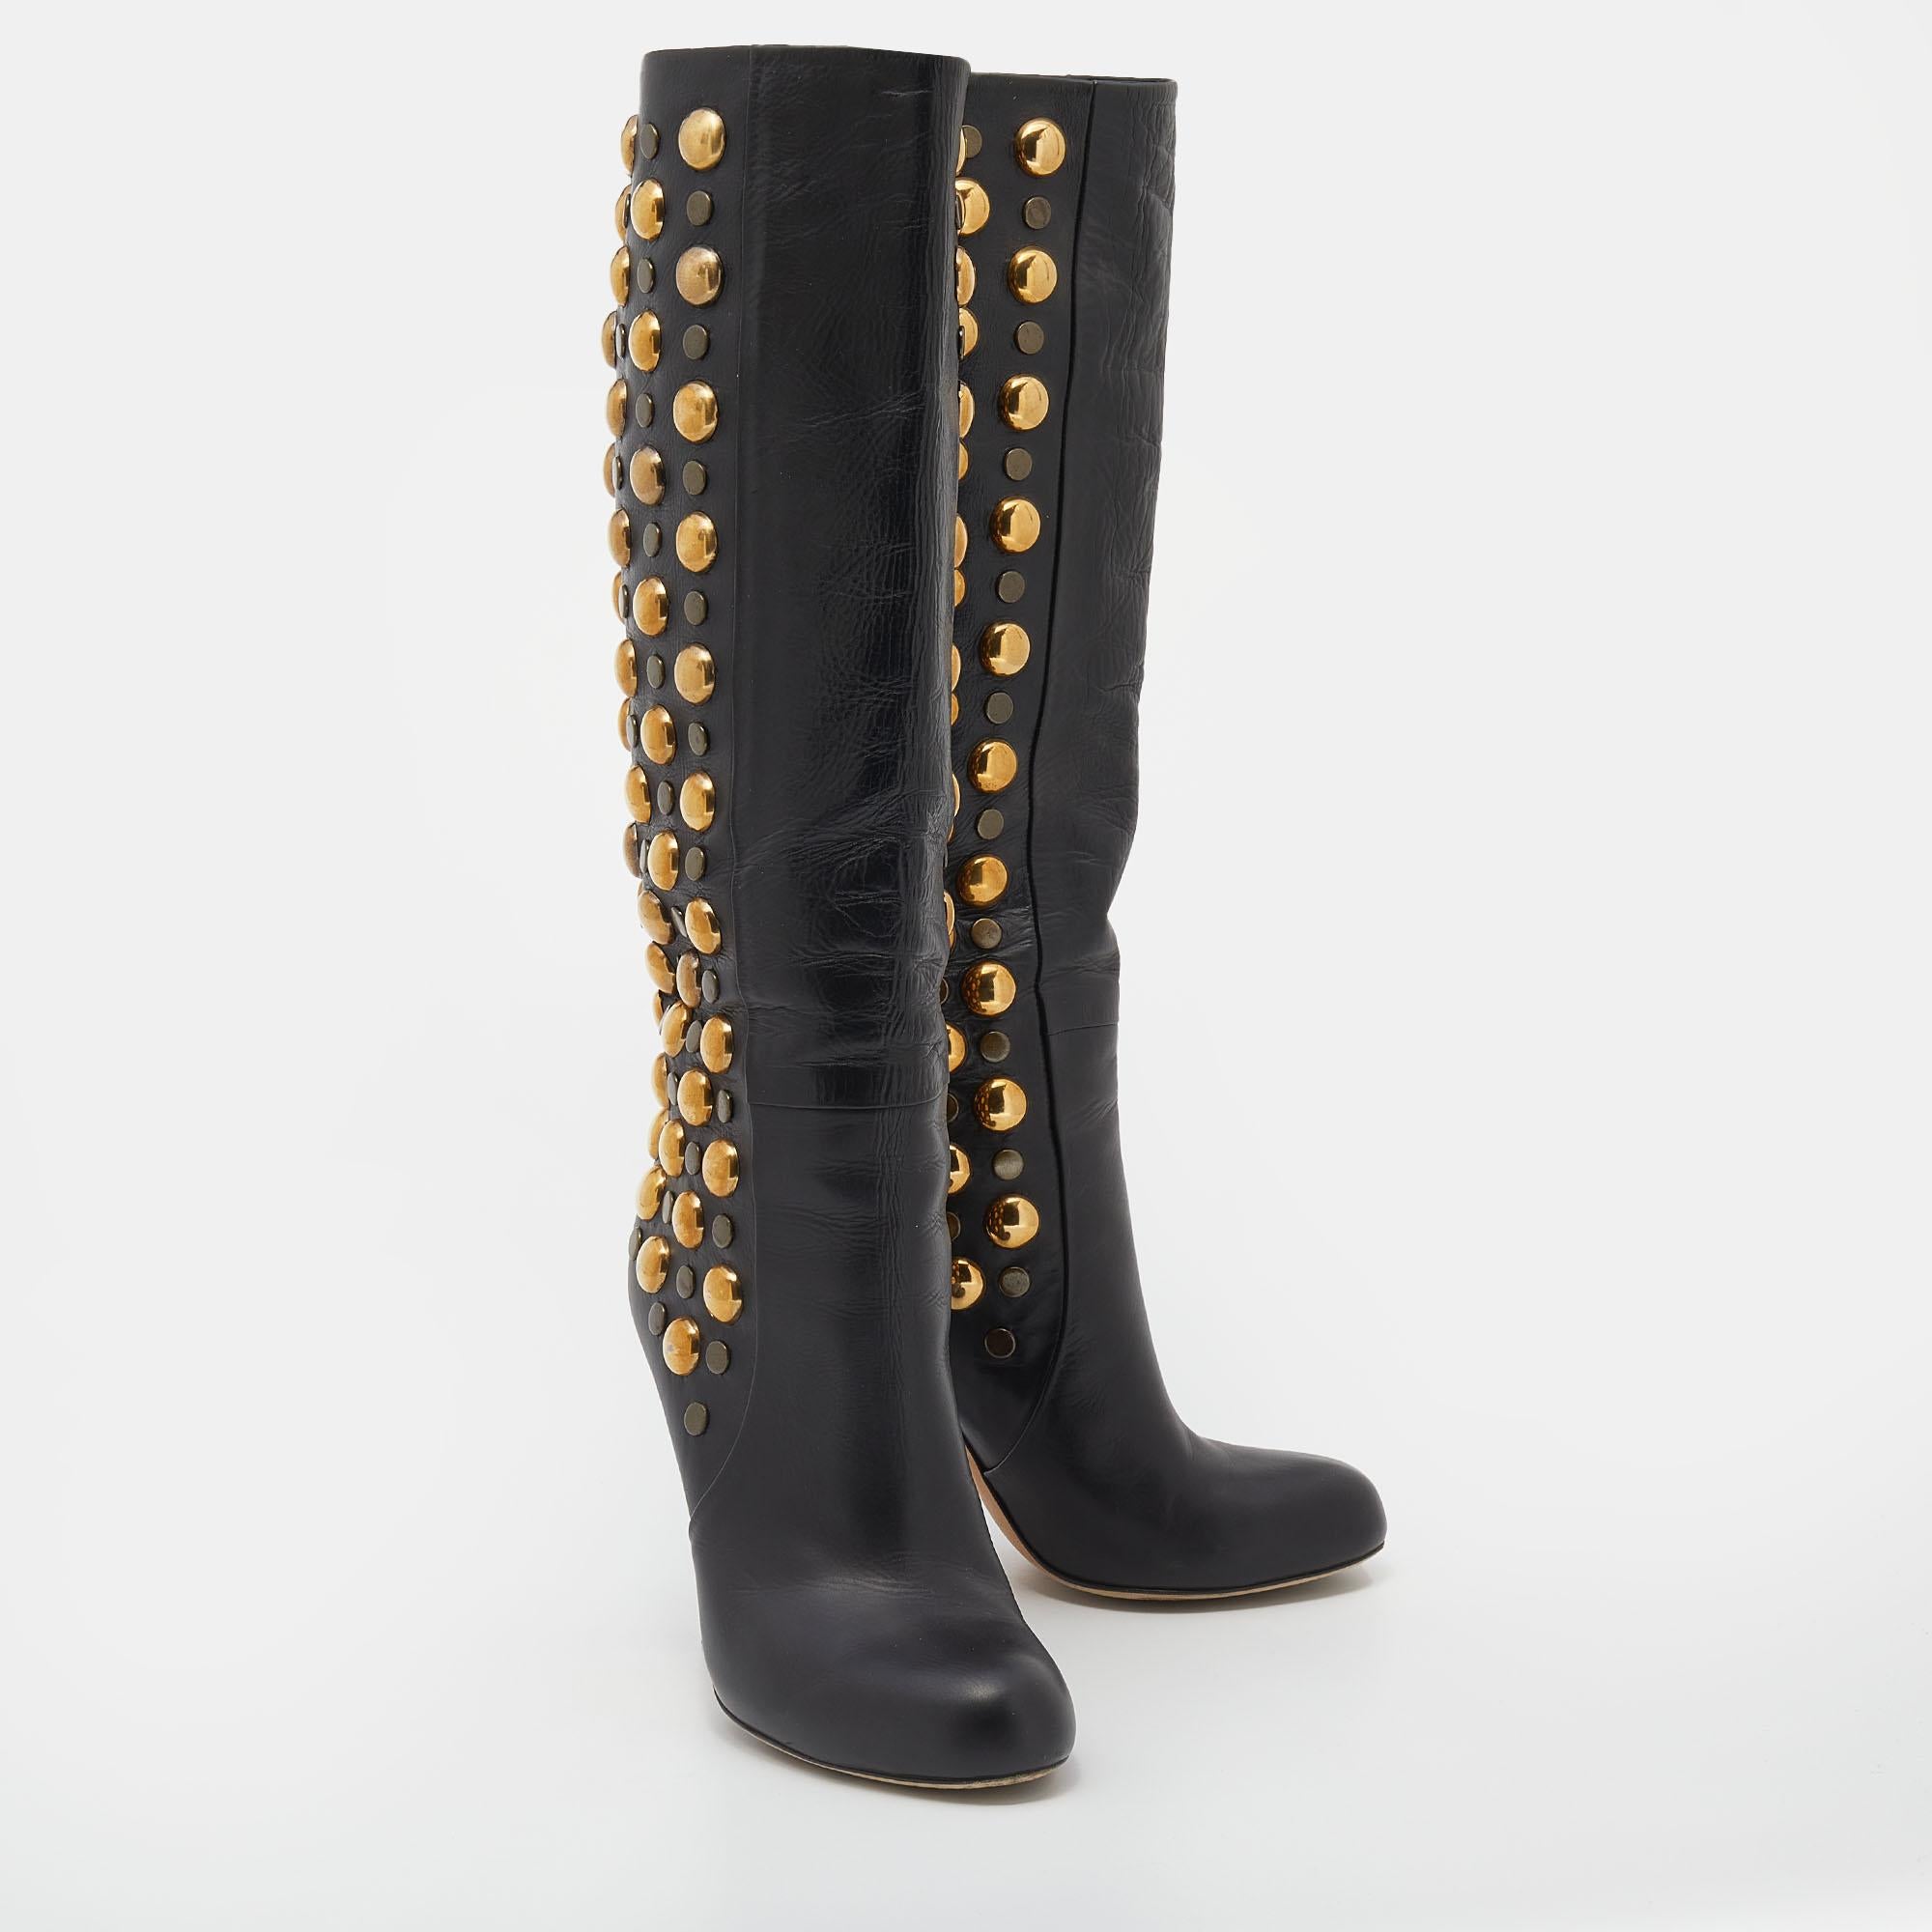 Gucci Black Leather Babouska Studded Mid Calf Length Boots Size 36 1